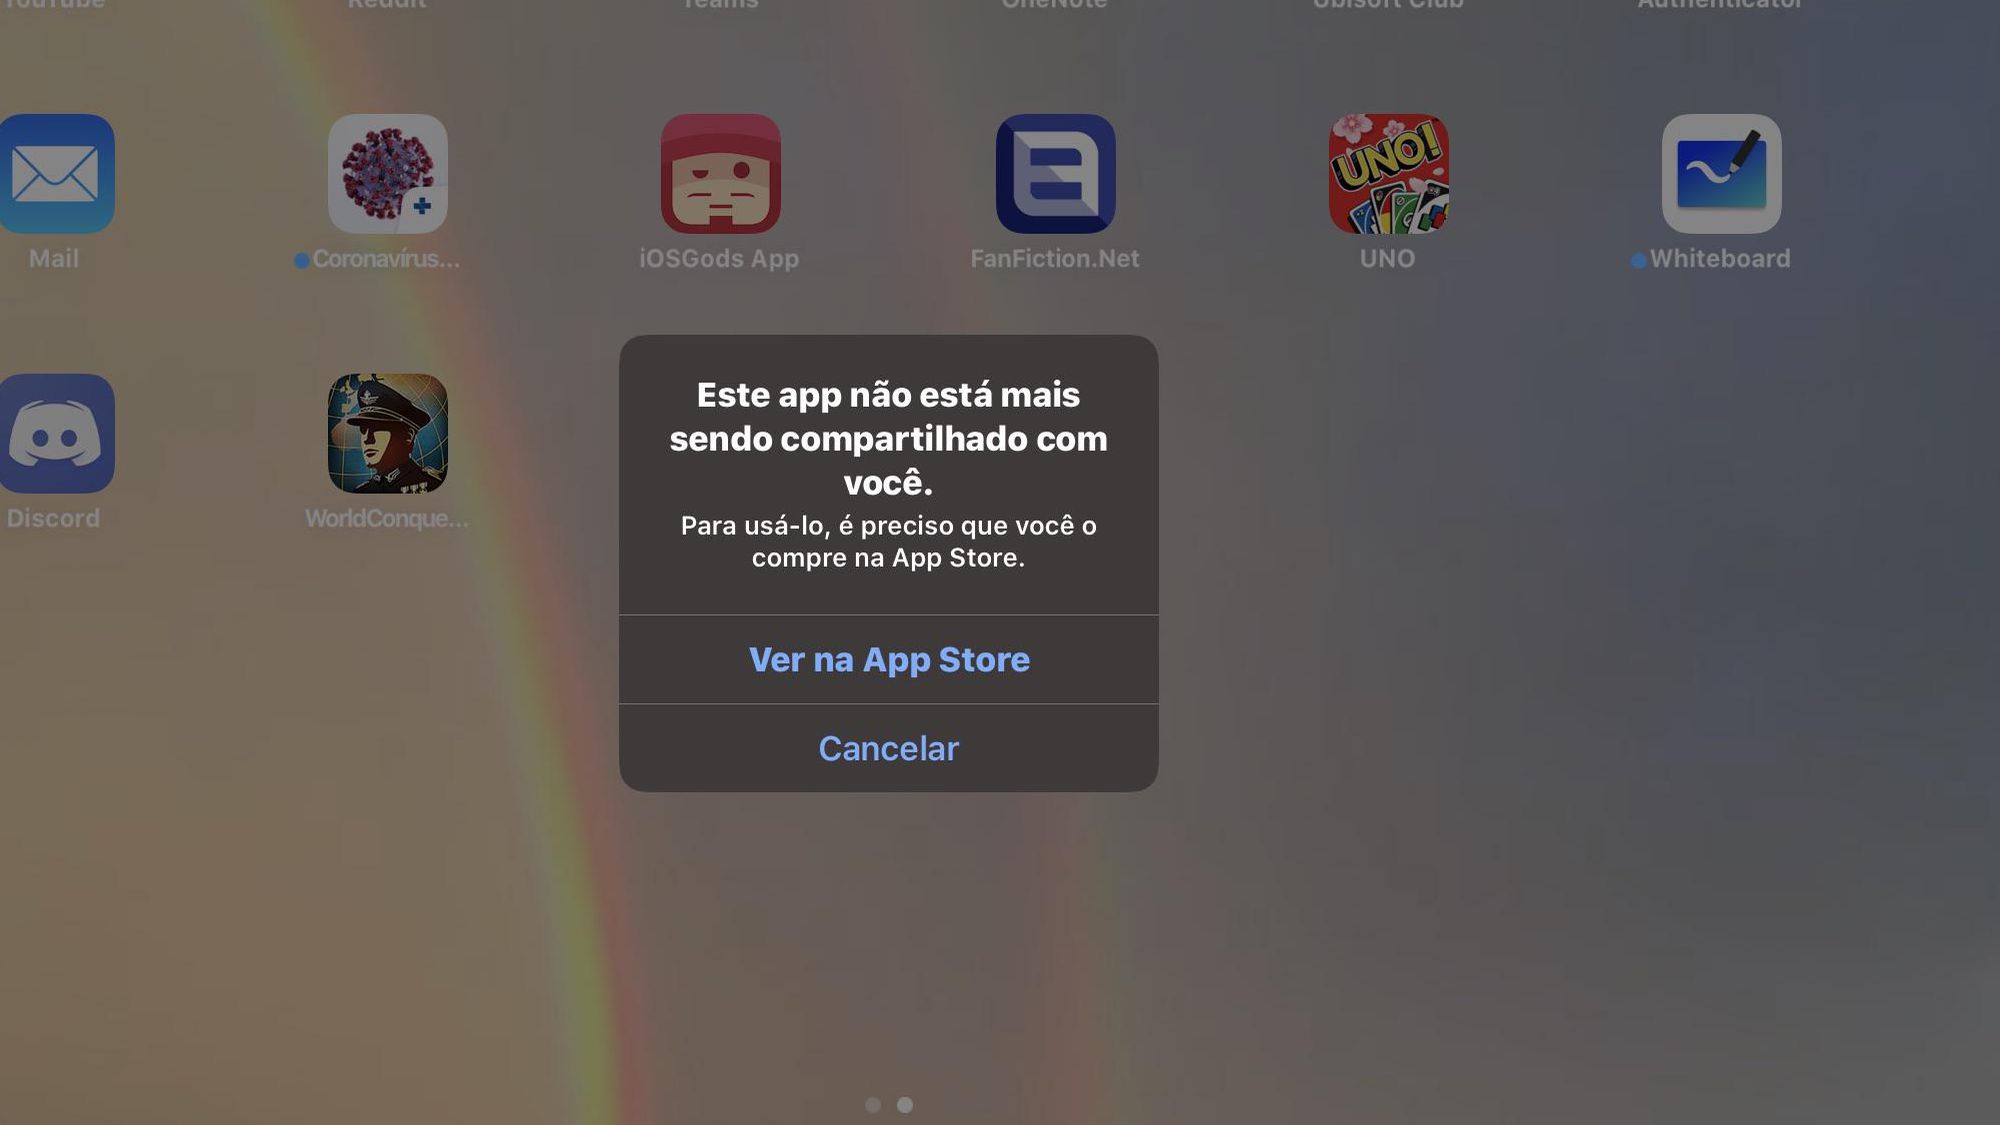 Novo jailbreak consegue desbloquear qualquer iPhone ou iPad - Canaltech